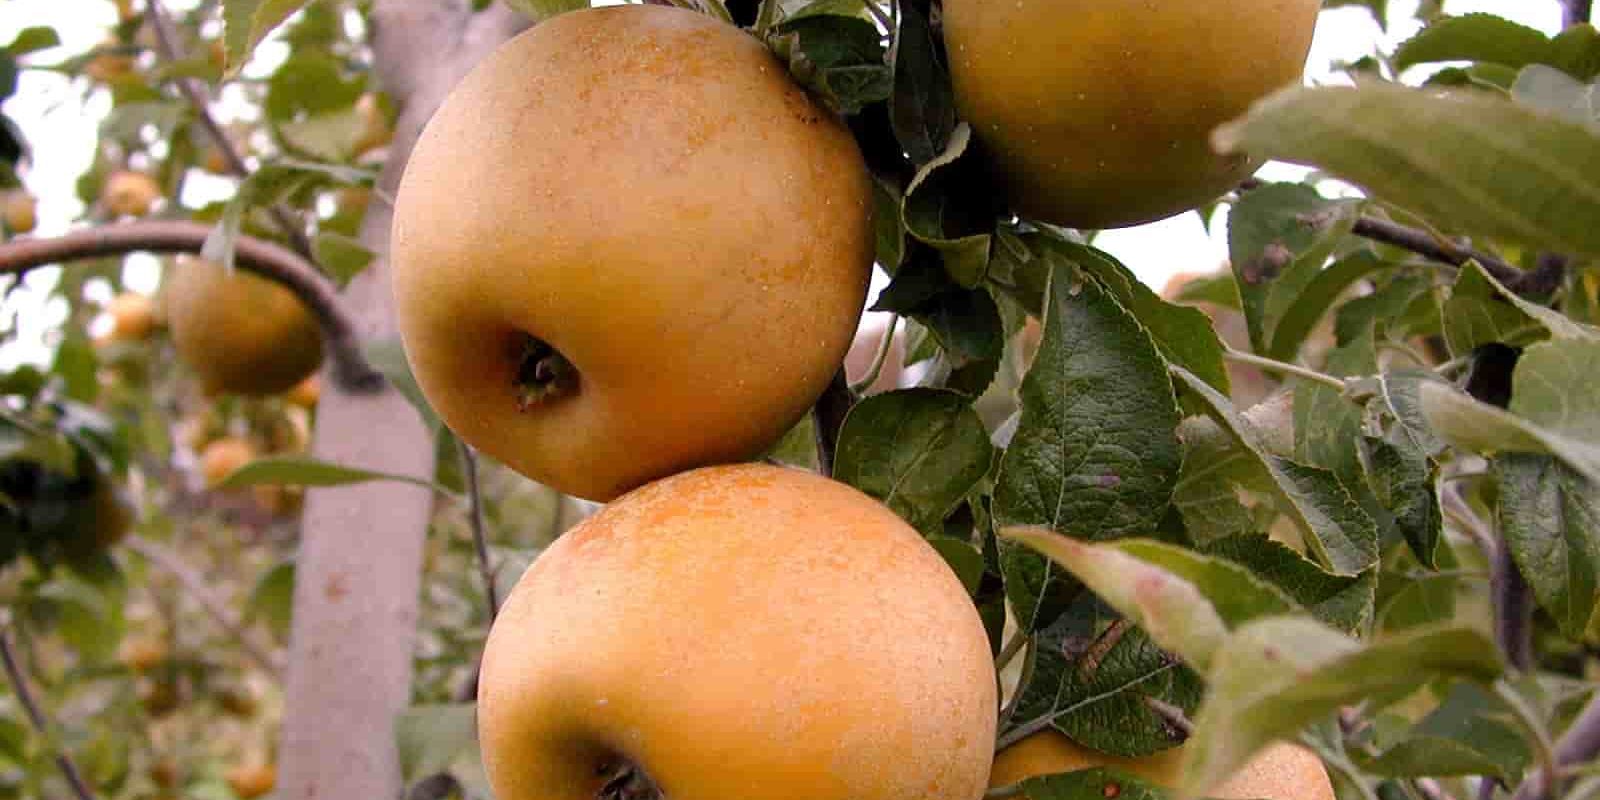 Russet apple tree for sale uk